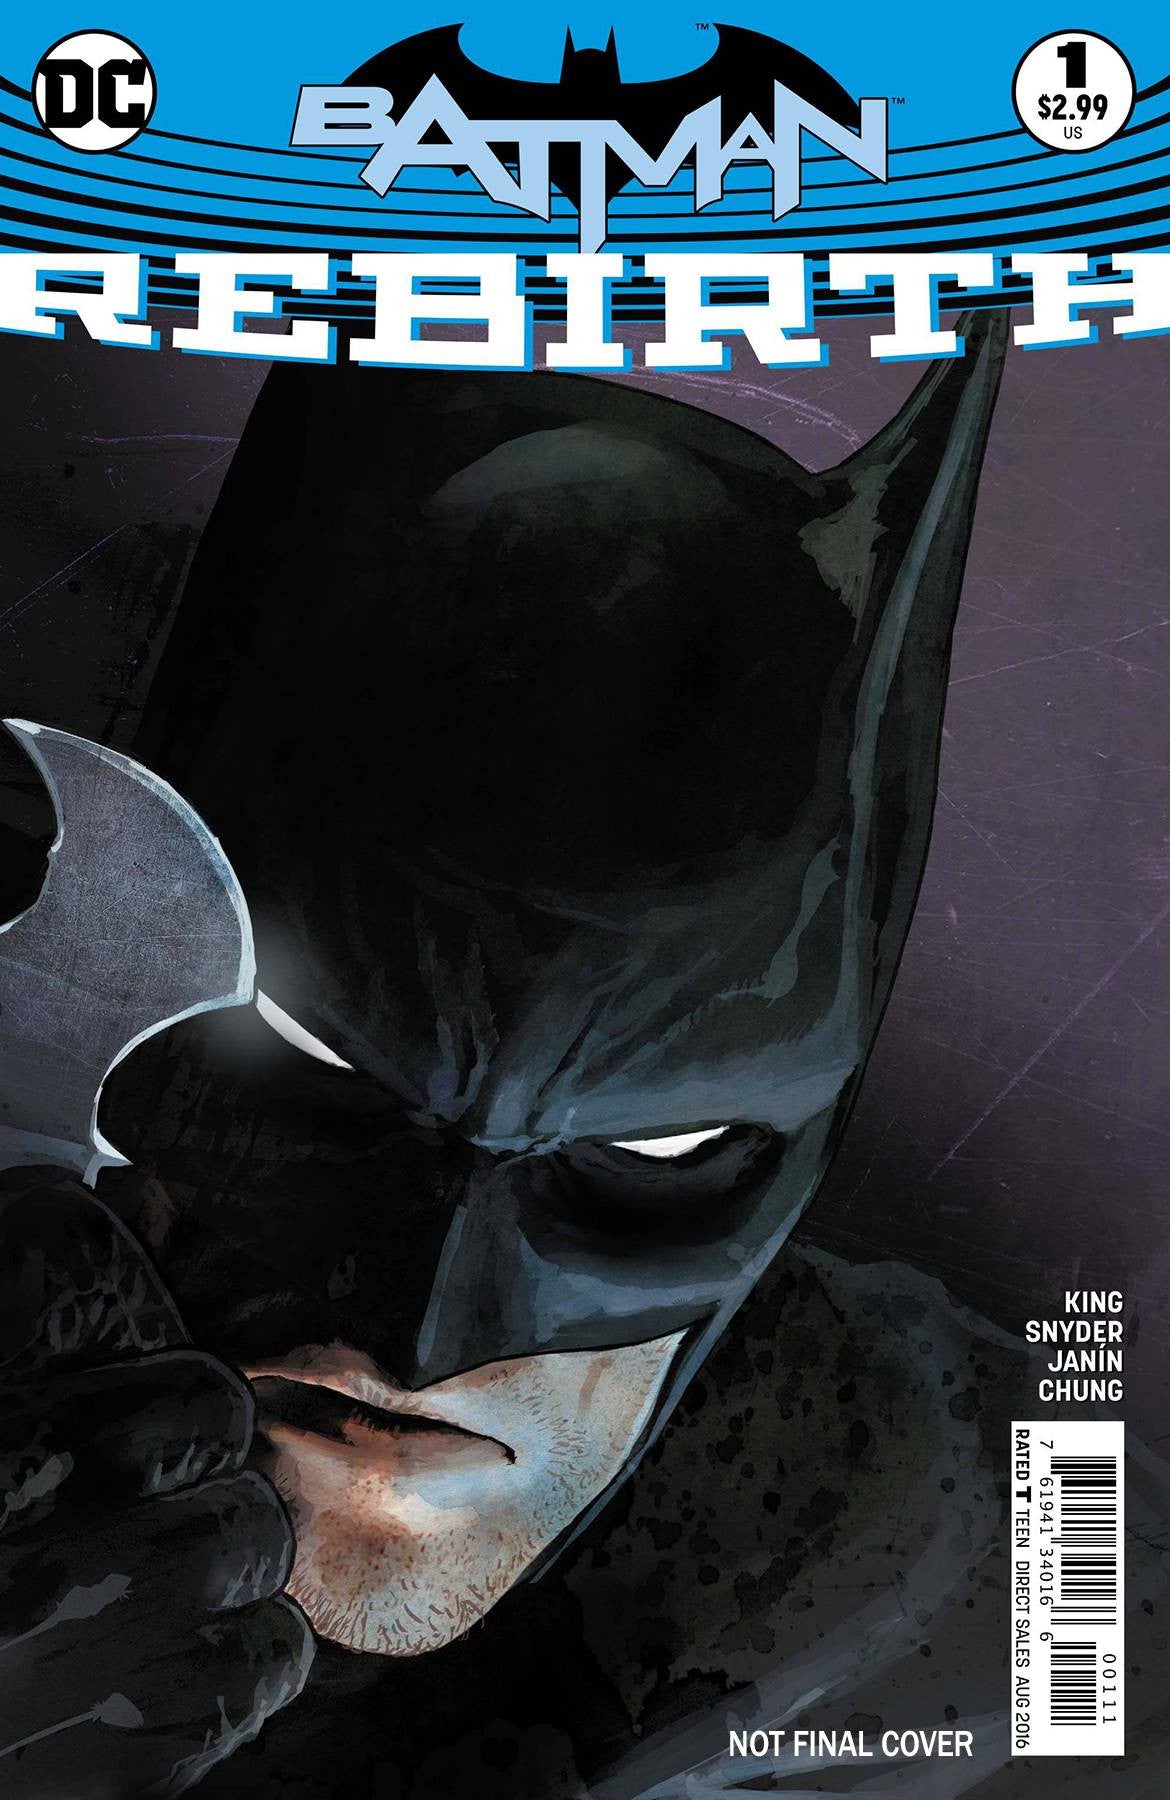 BATMAN REBIRTH #1 2ND PTG COVER